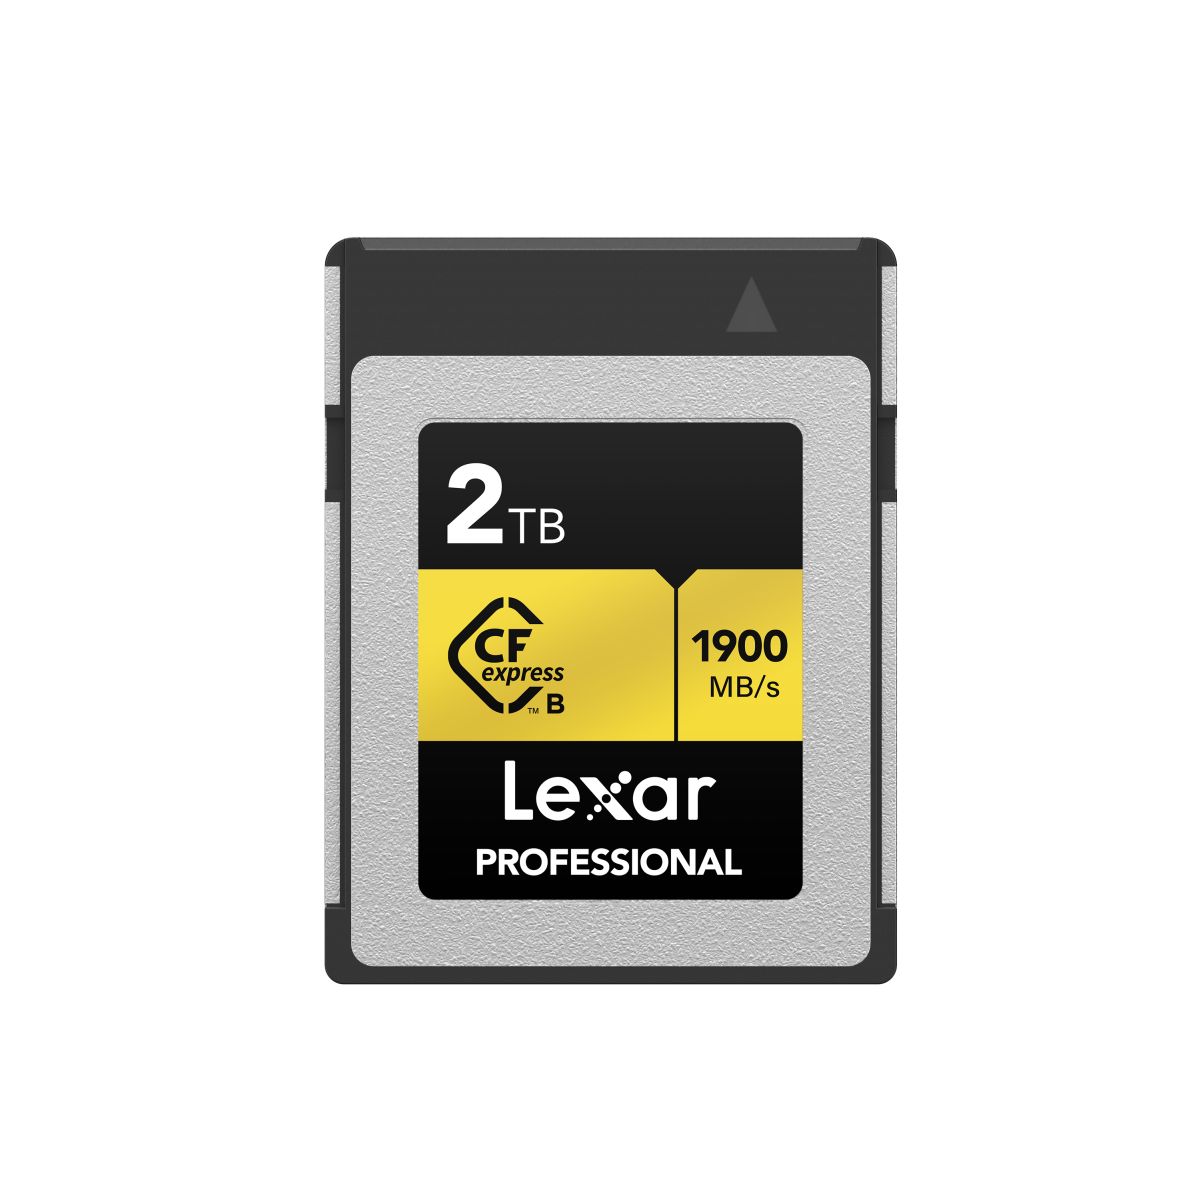 Lexar 2TB CFexpress PRO Gold Type B 1500 MB/s